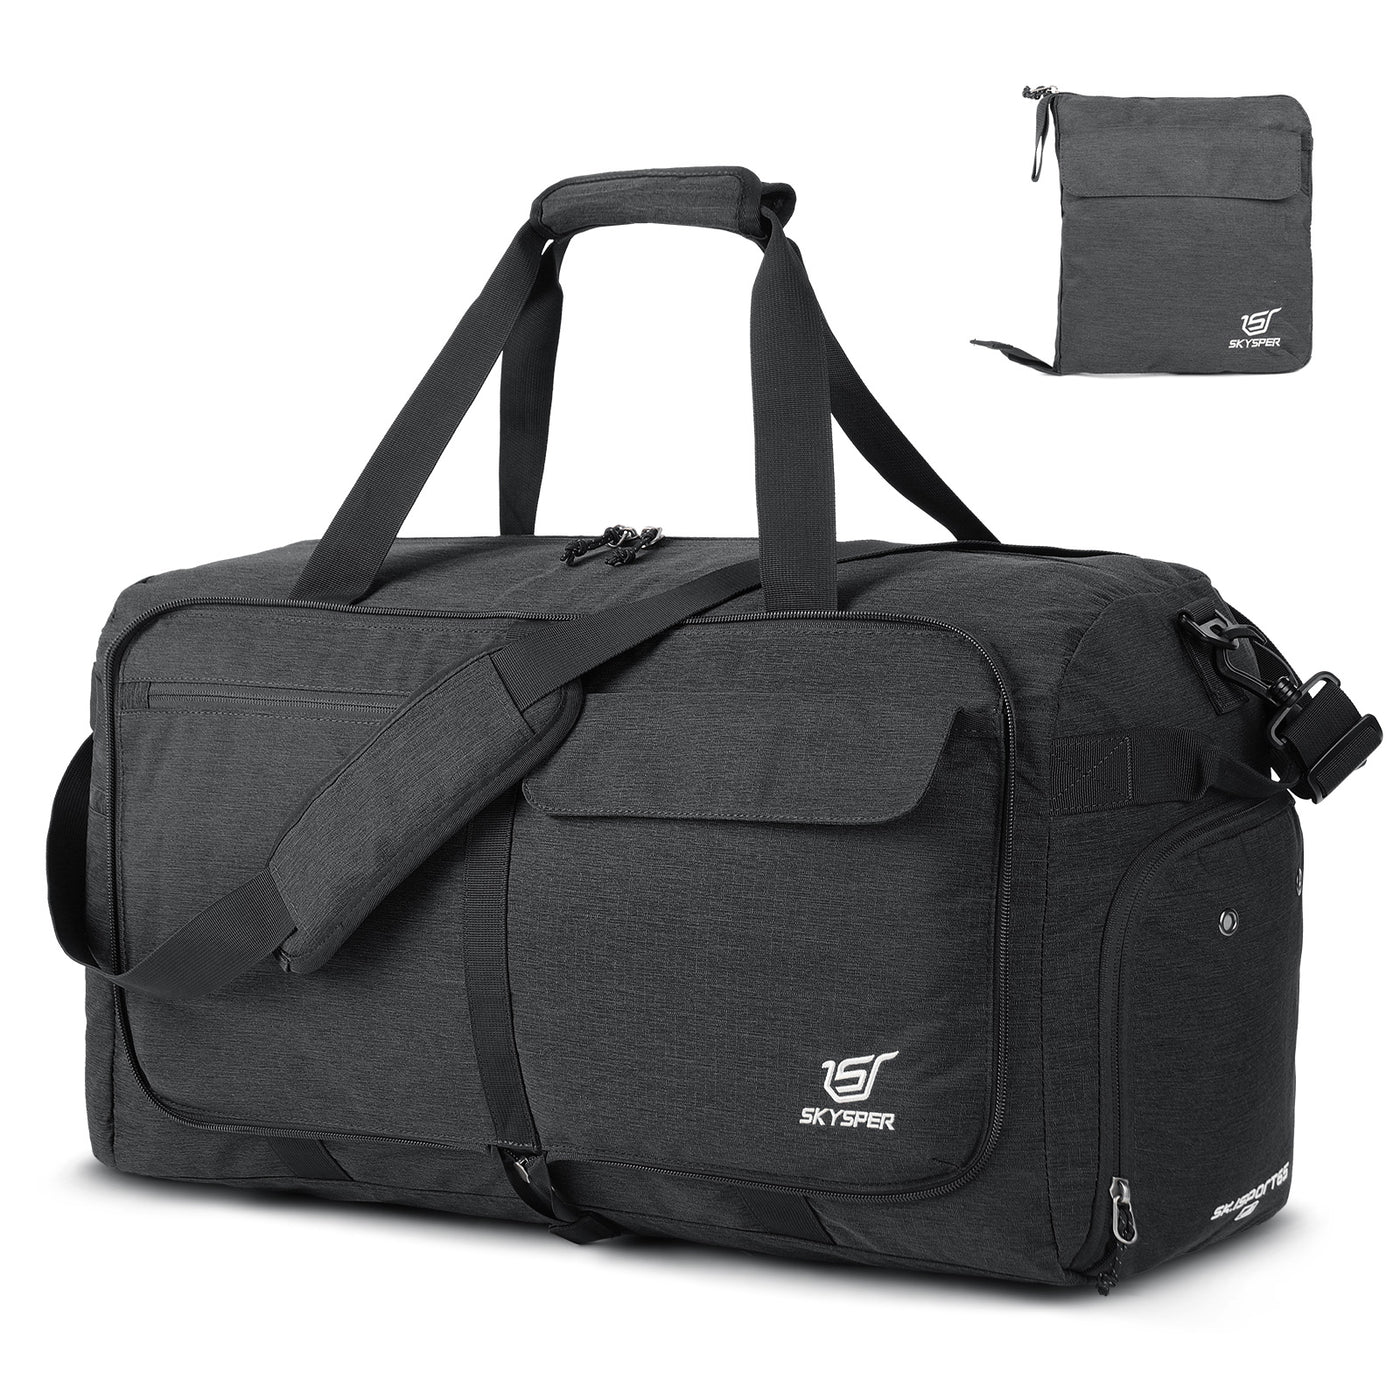 SKYSPER ISPORT65 - 27" Foldable  Travel Duffle Bag